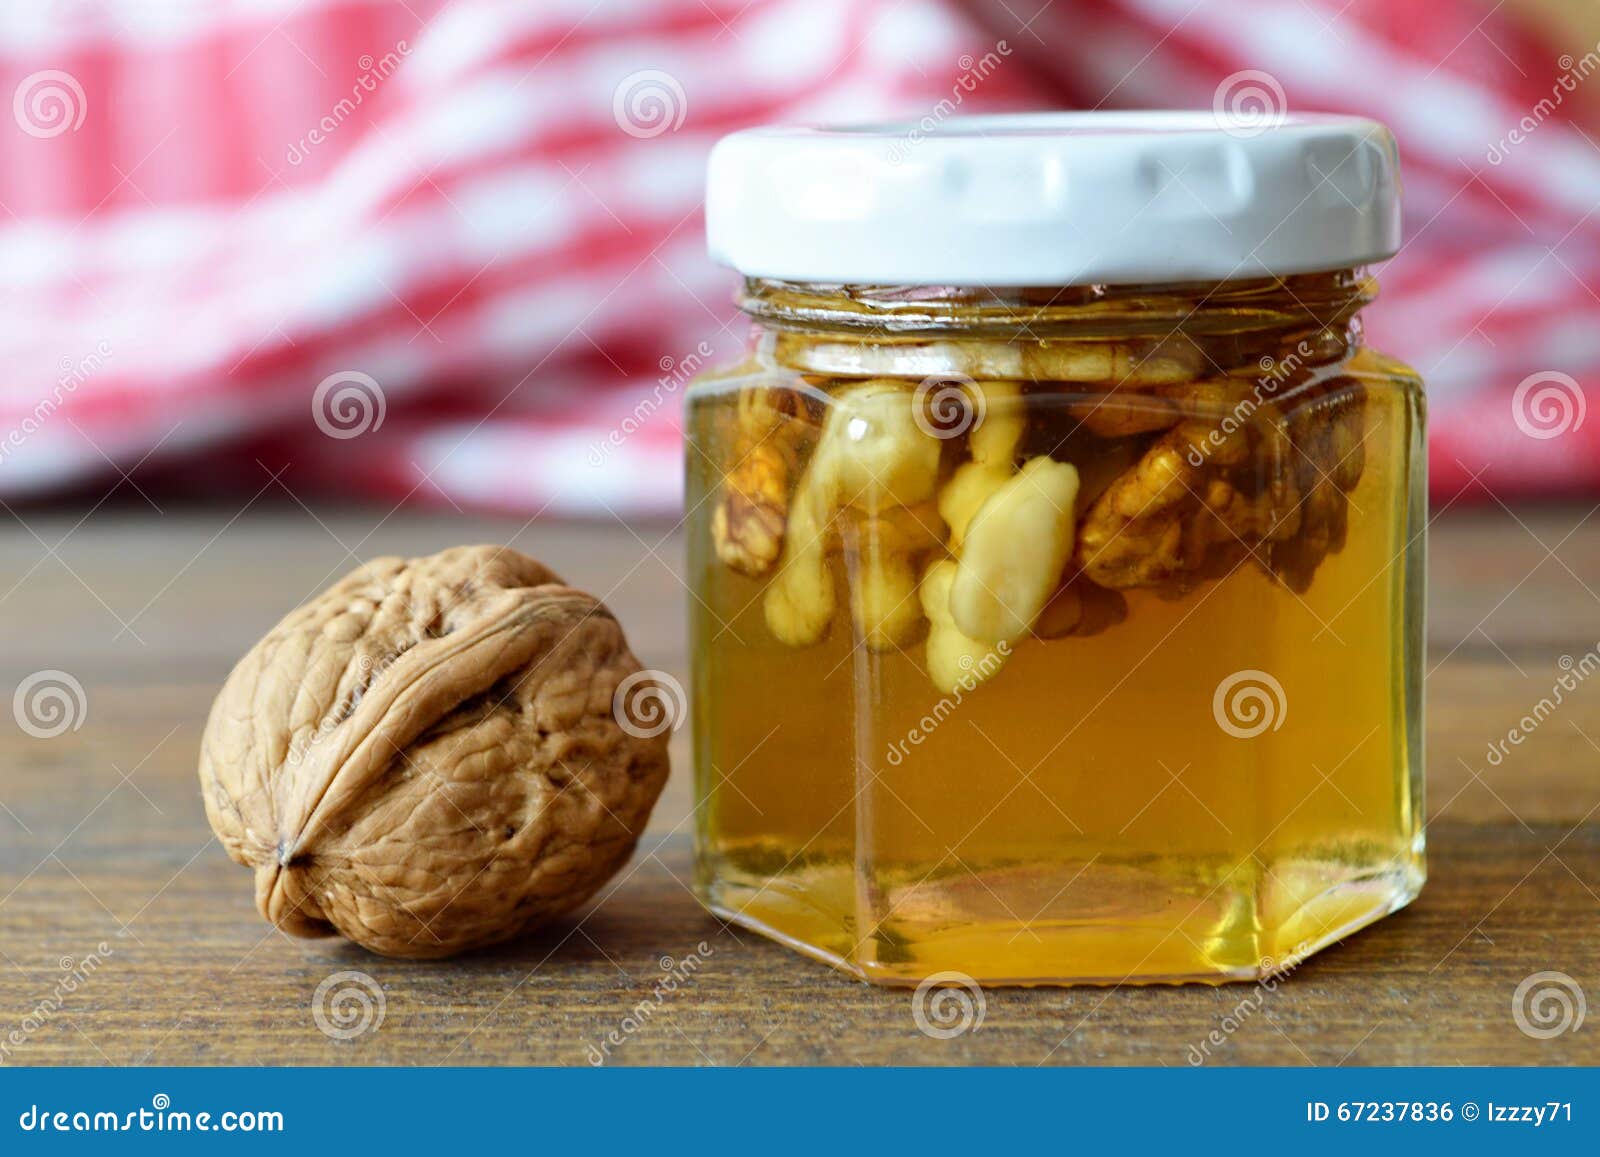 Медовый орех. Алоэ мед лимон орехи. Грецкий орех с мёдом. Алоэ с медом и орехами. Алоэ мед орехи